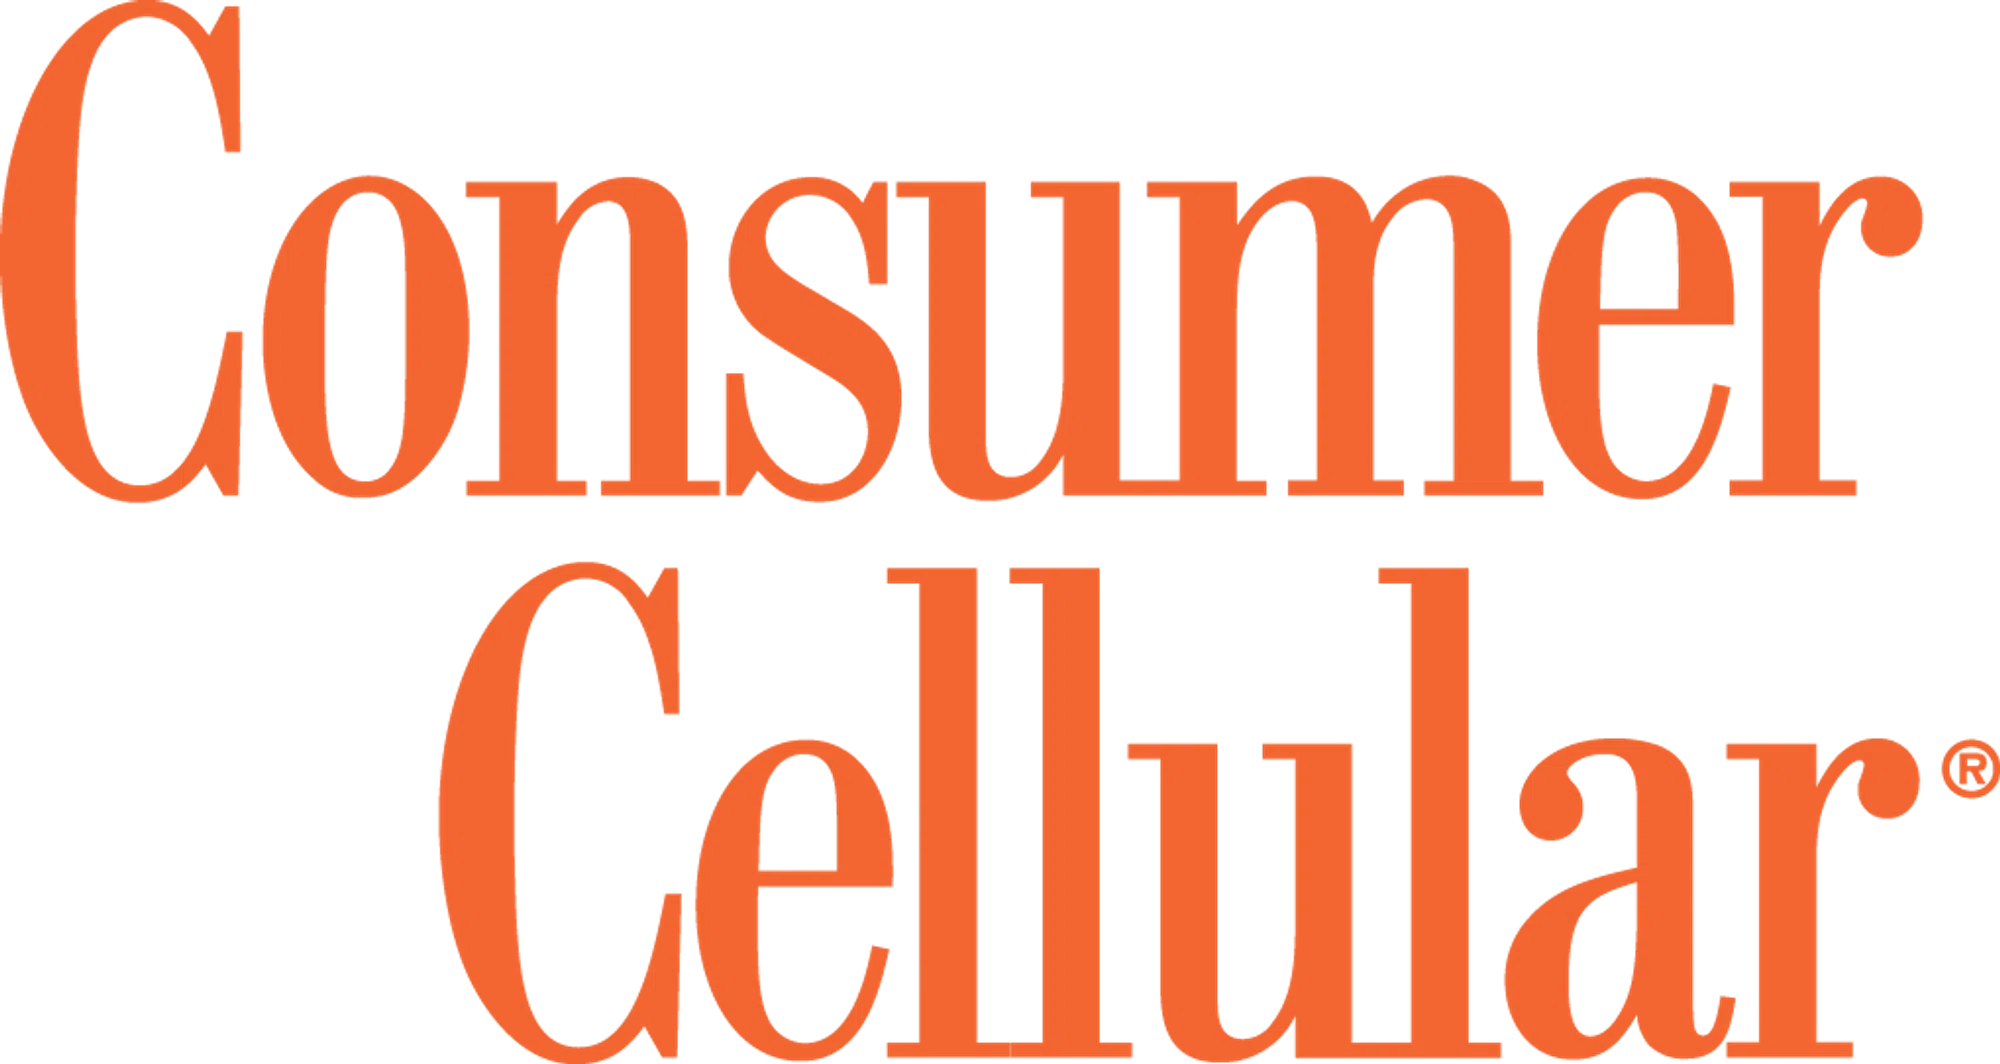 Consumer Cellular Promo Codes